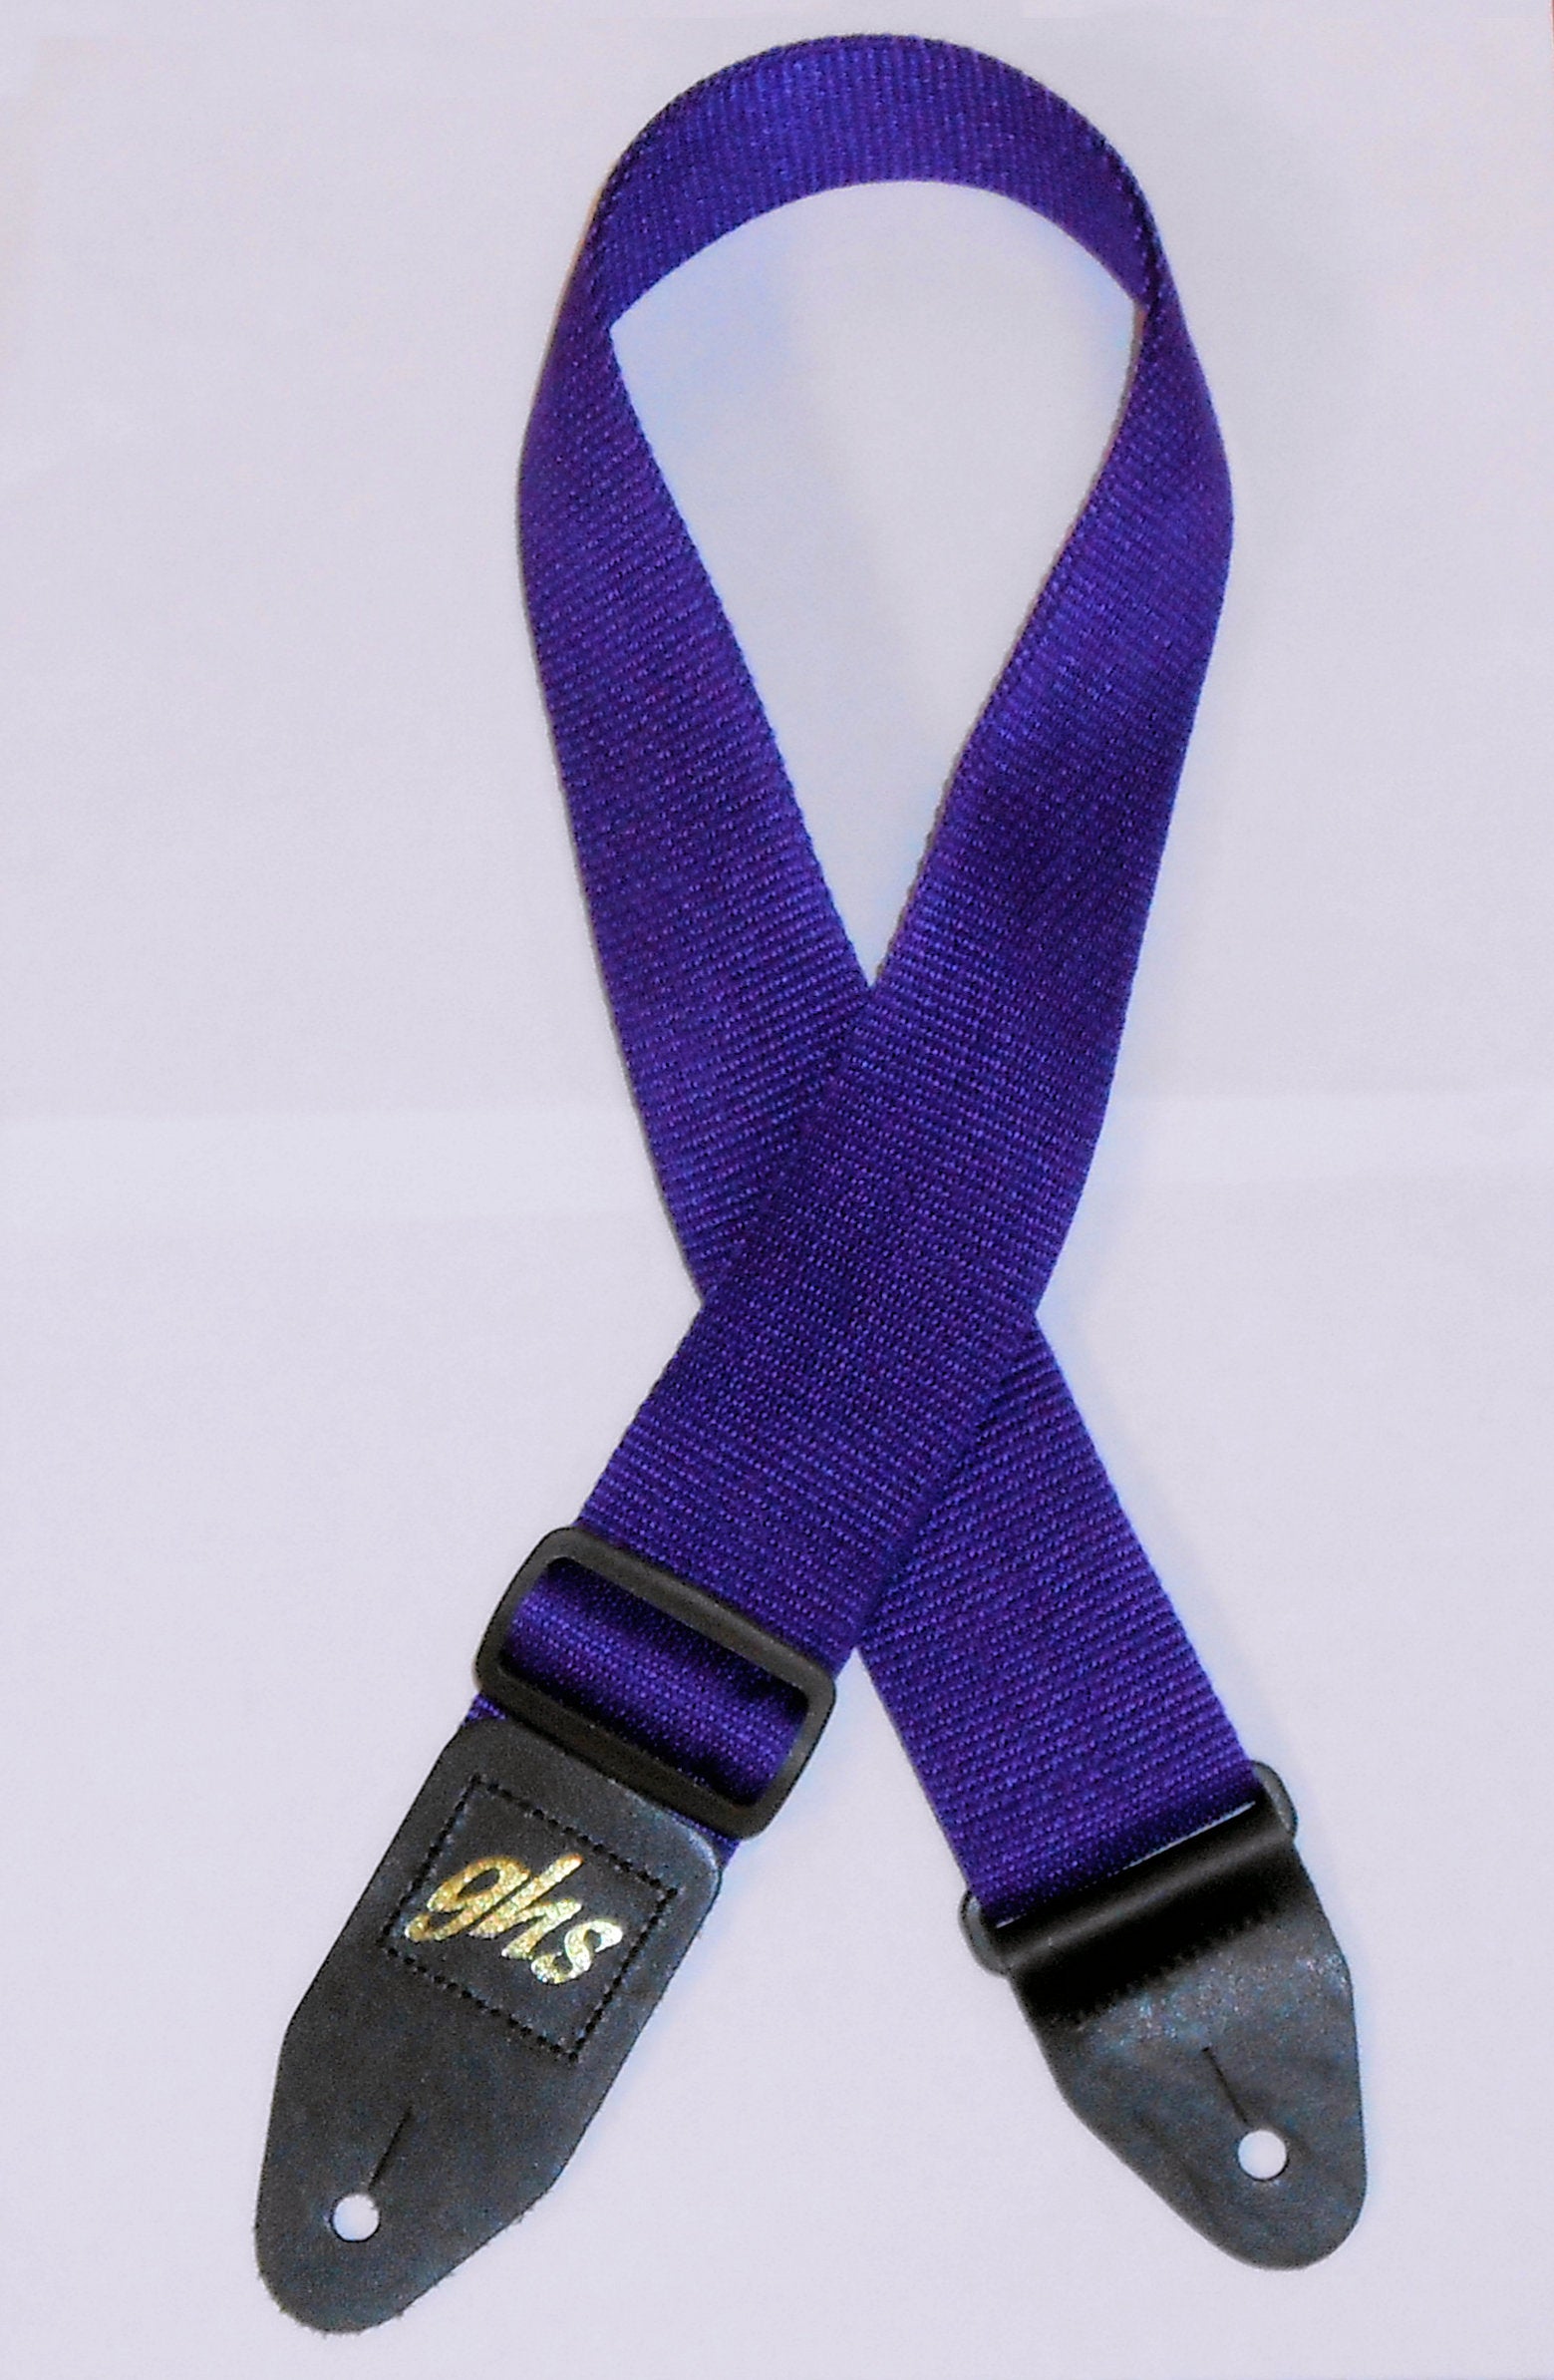 A Nylon Strap - Purple with a black buckle.